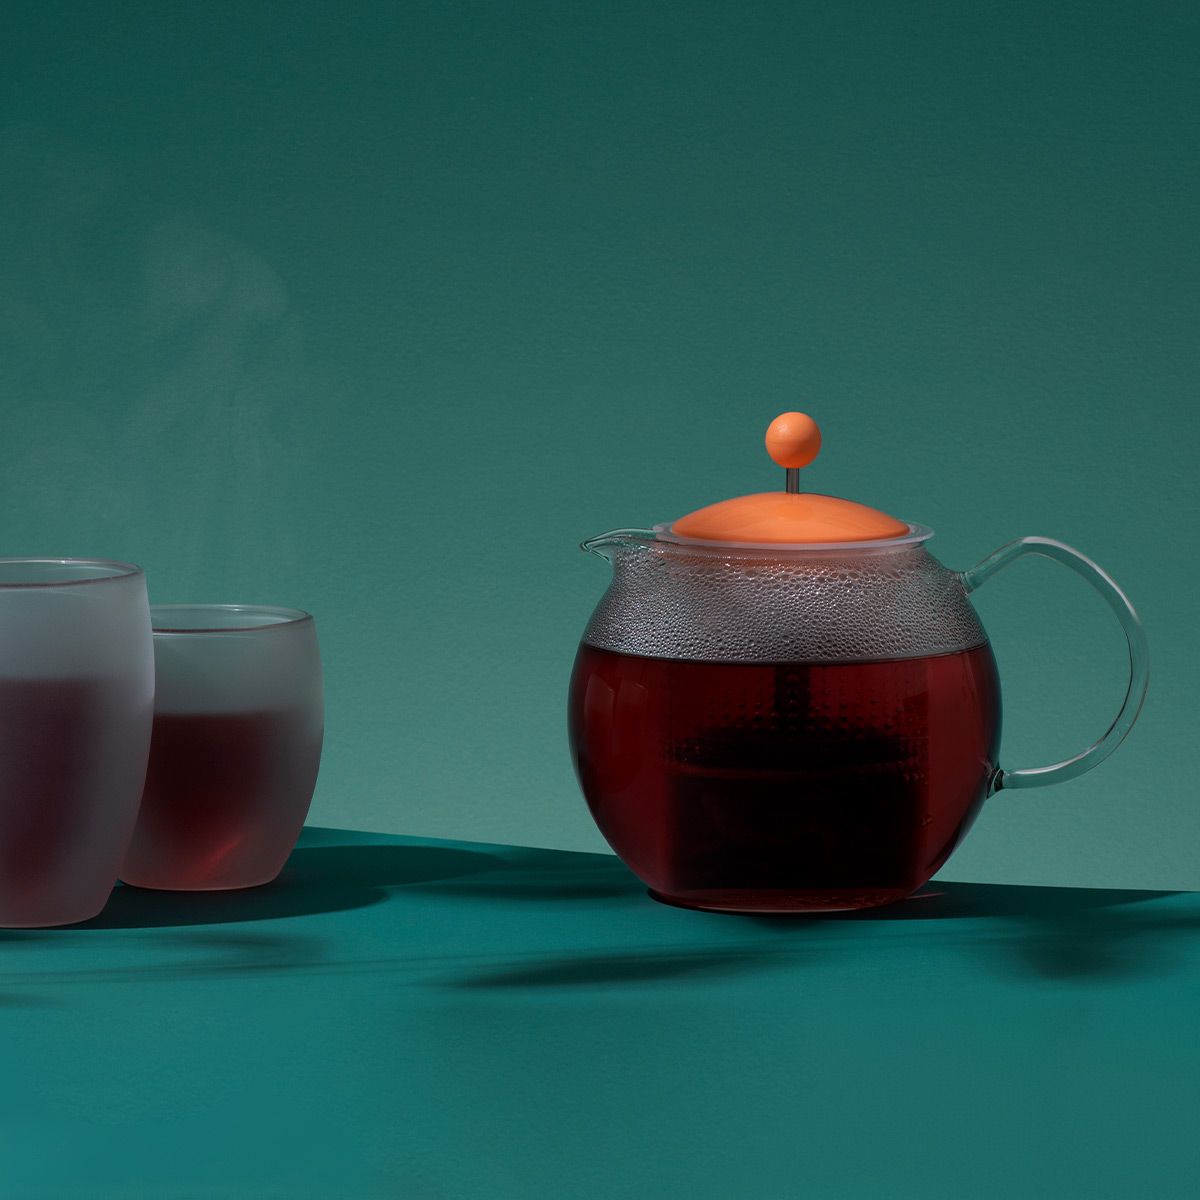 Bodum Assam Glass Tea Press with Stainless Steel Filter,  17-Ounce: Tea Services: Teapots